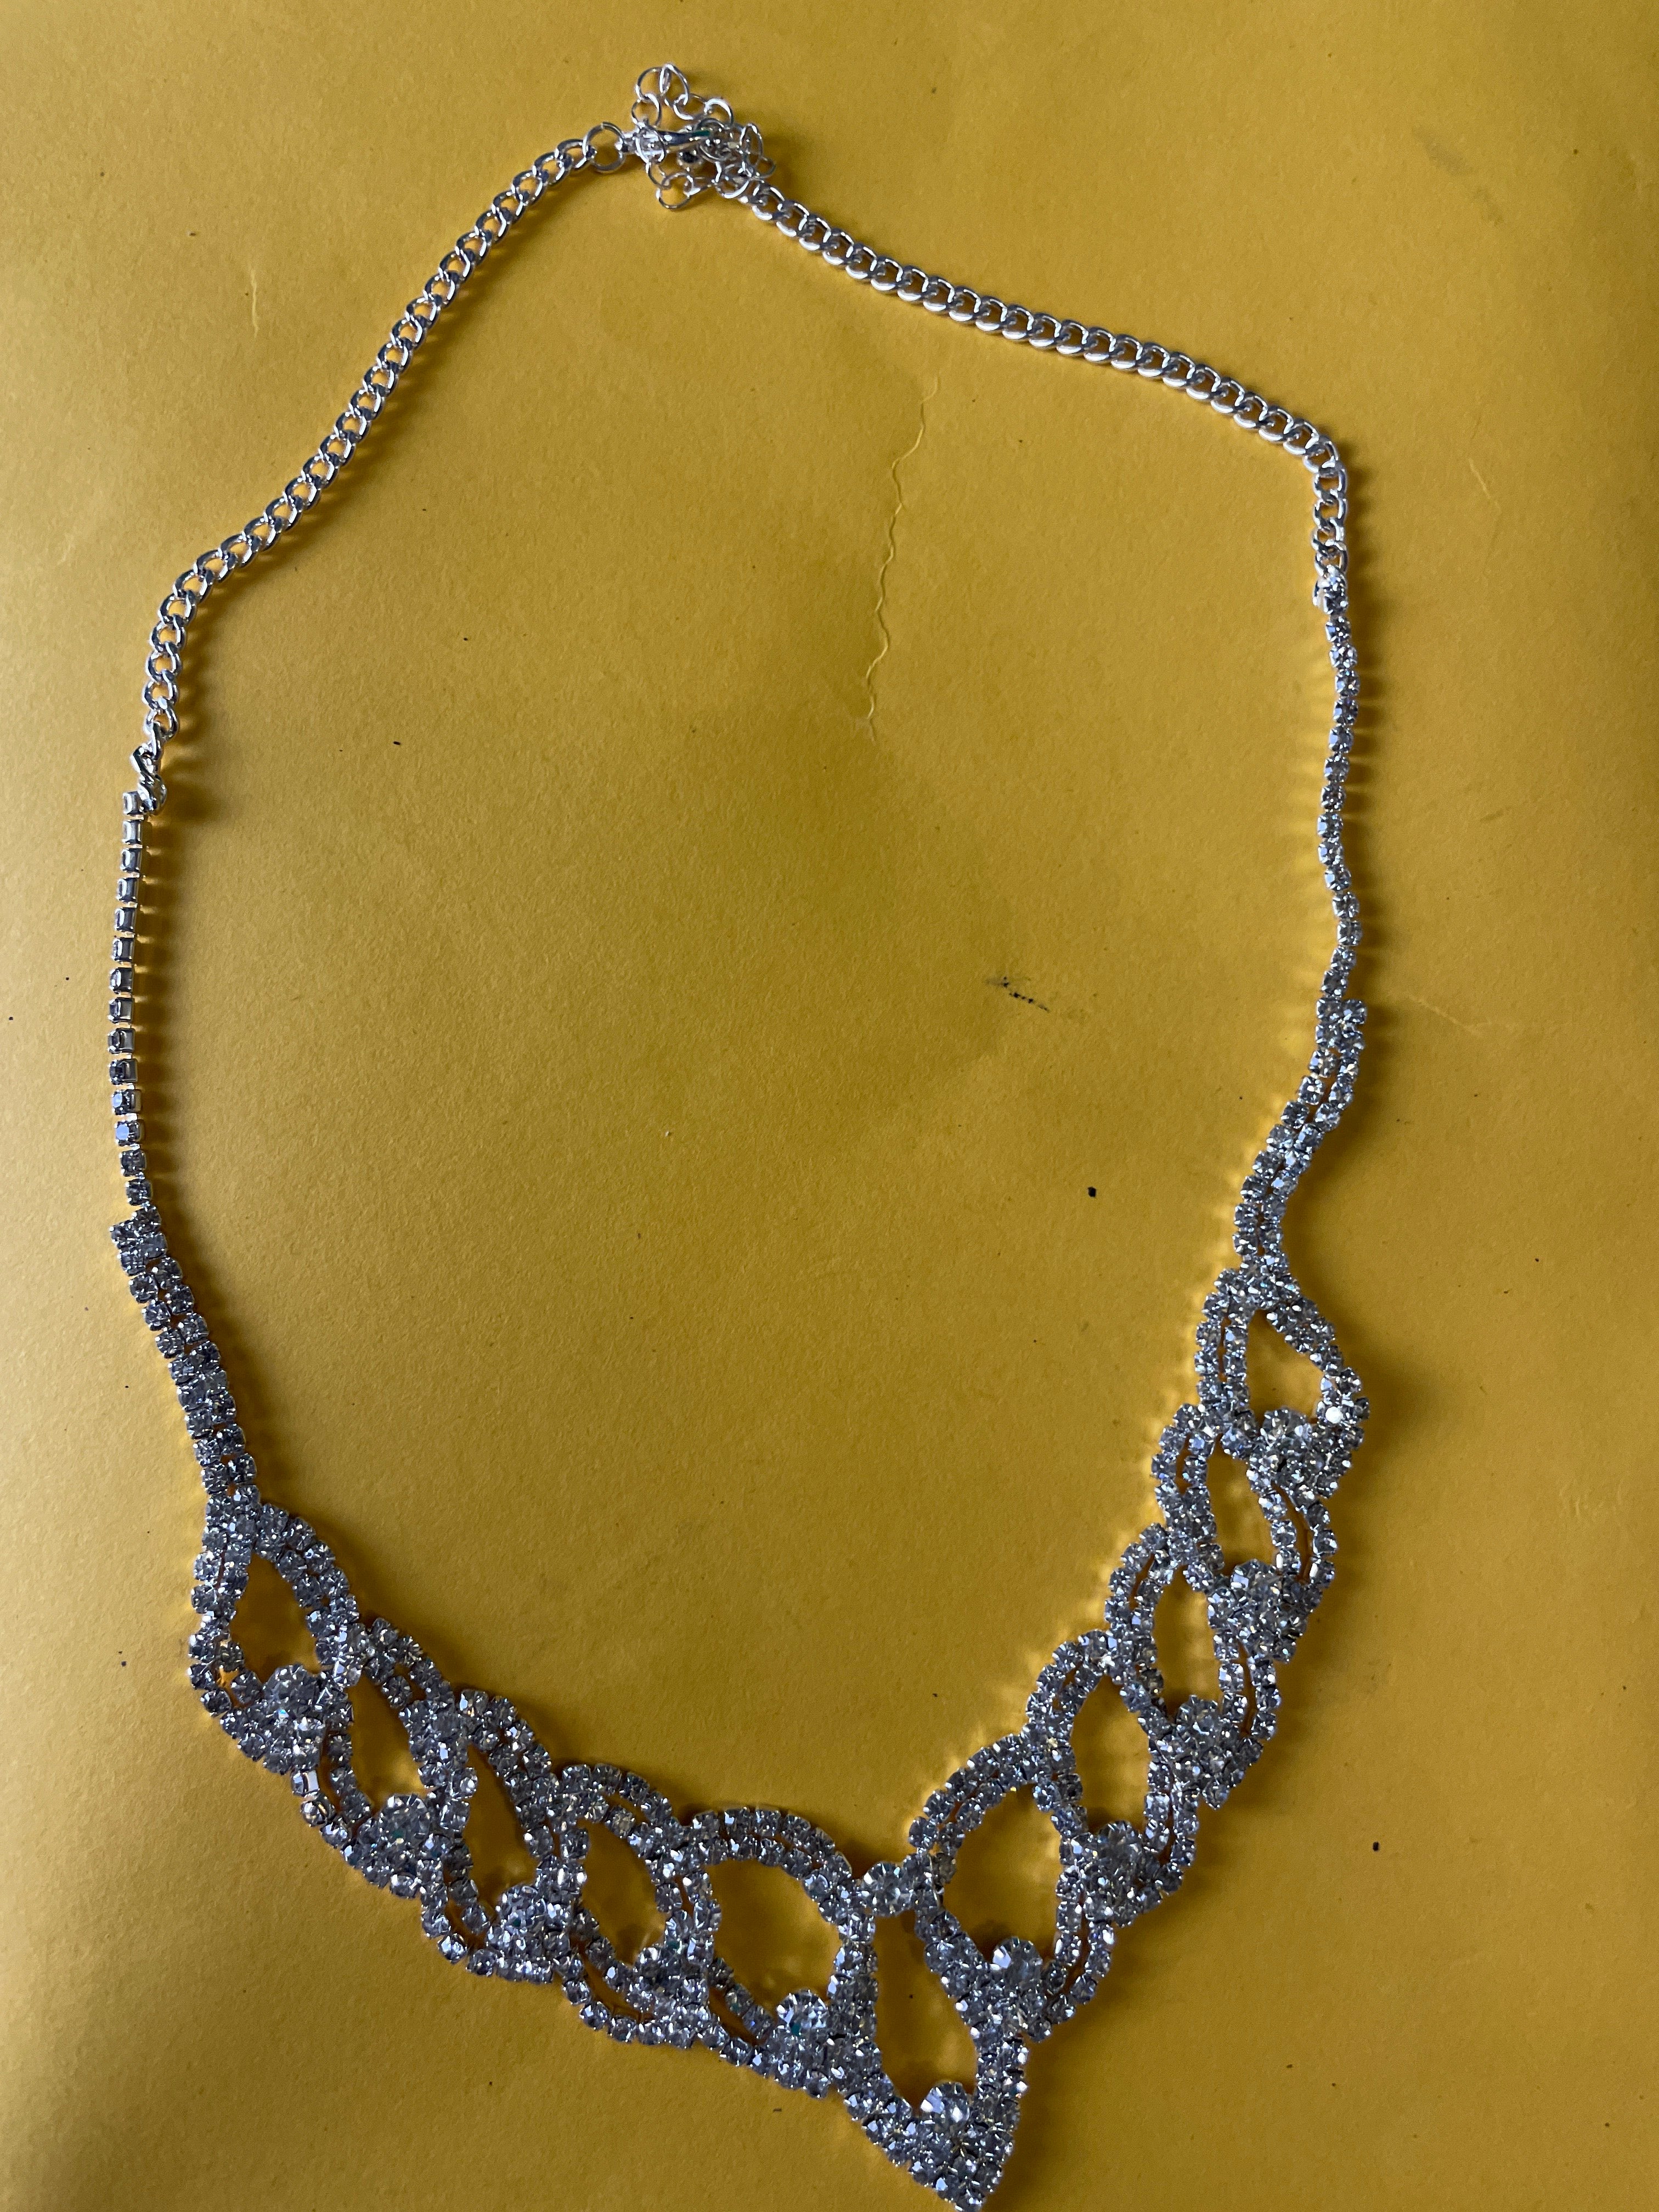 GOAH silver chain women's necklace with diamond pendant